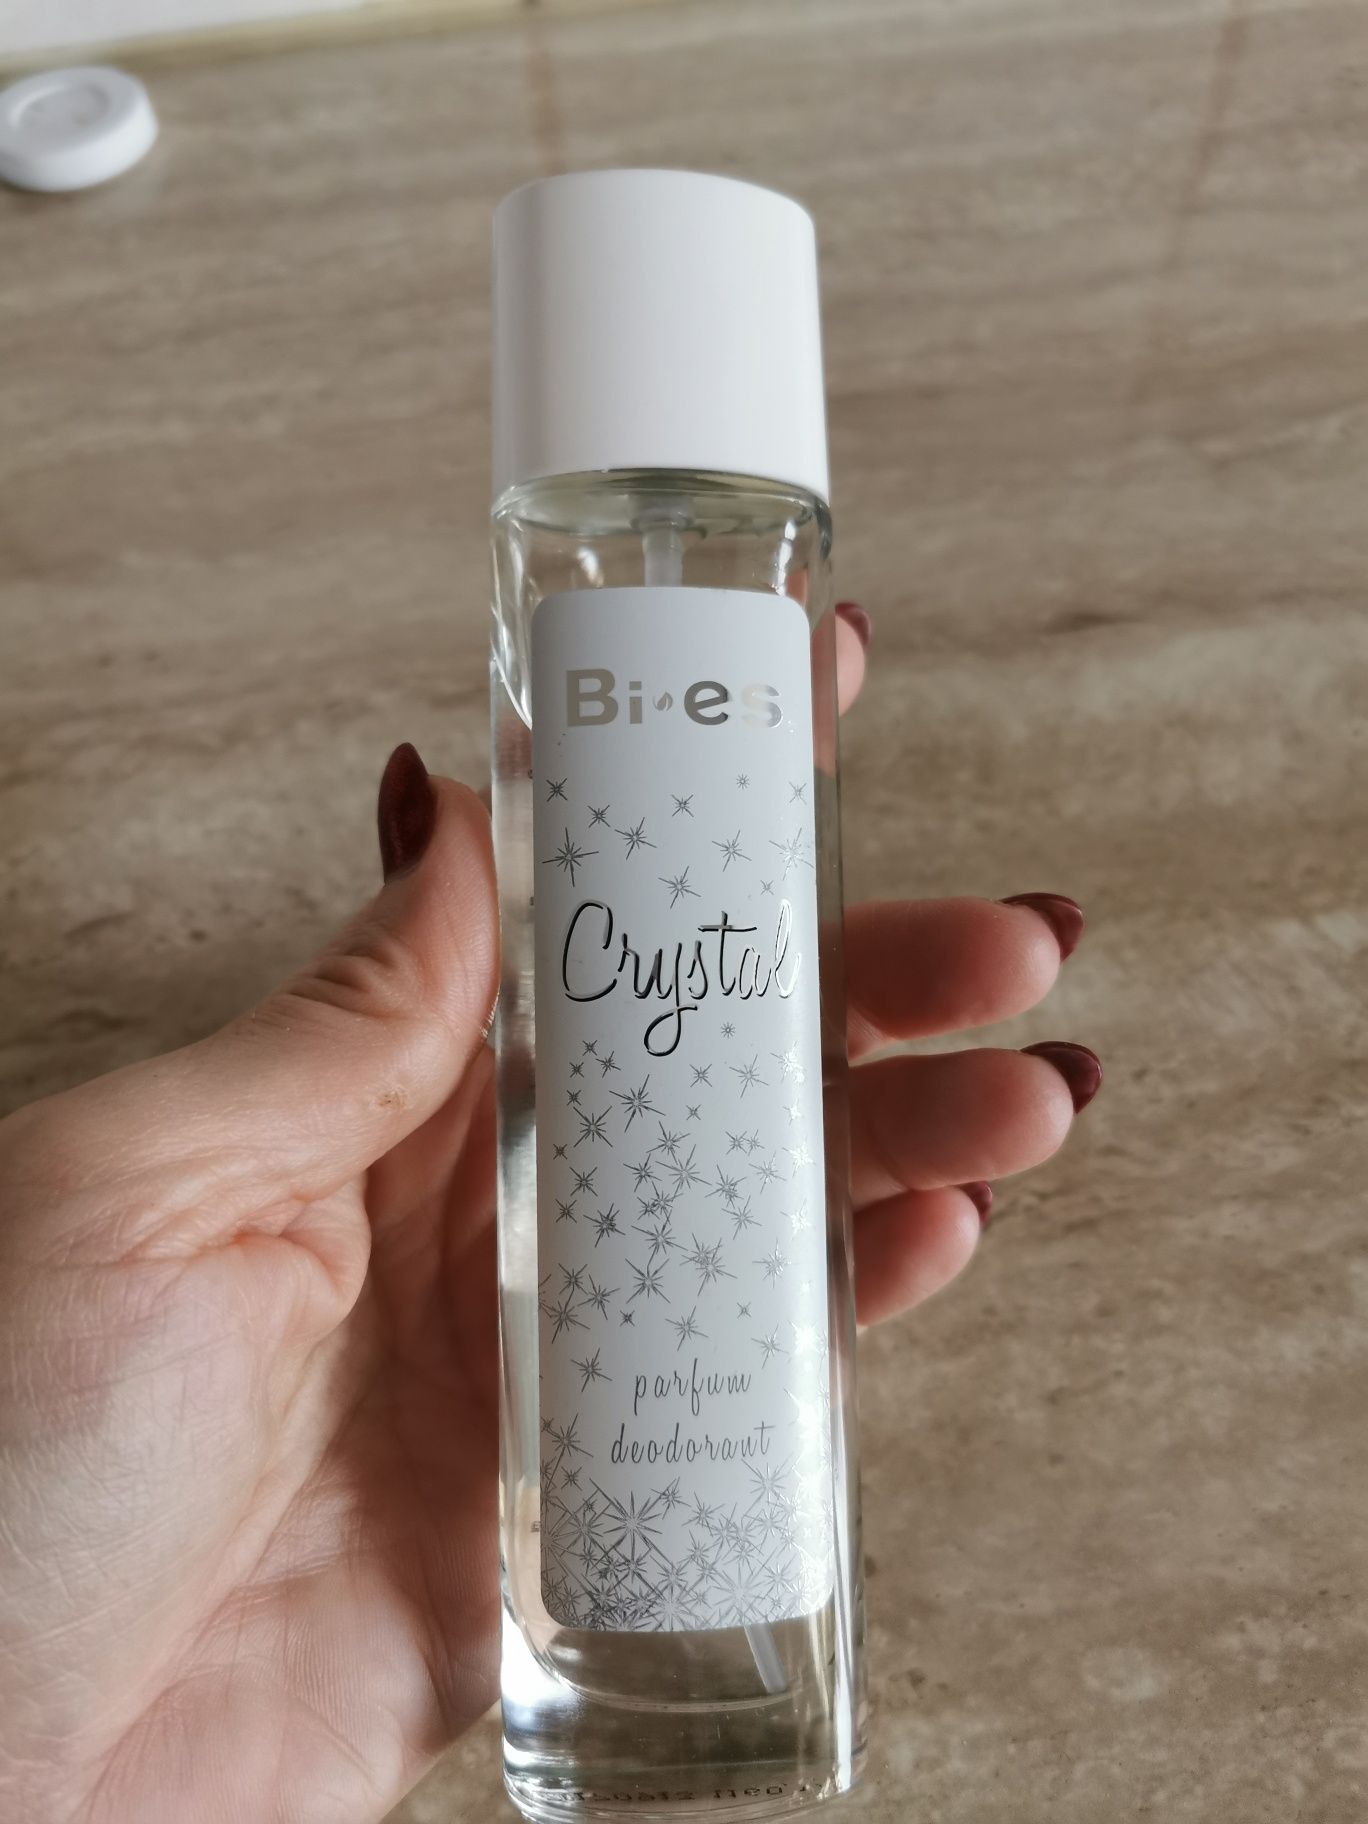 Bi-es Crystal dezodorant perfumowany